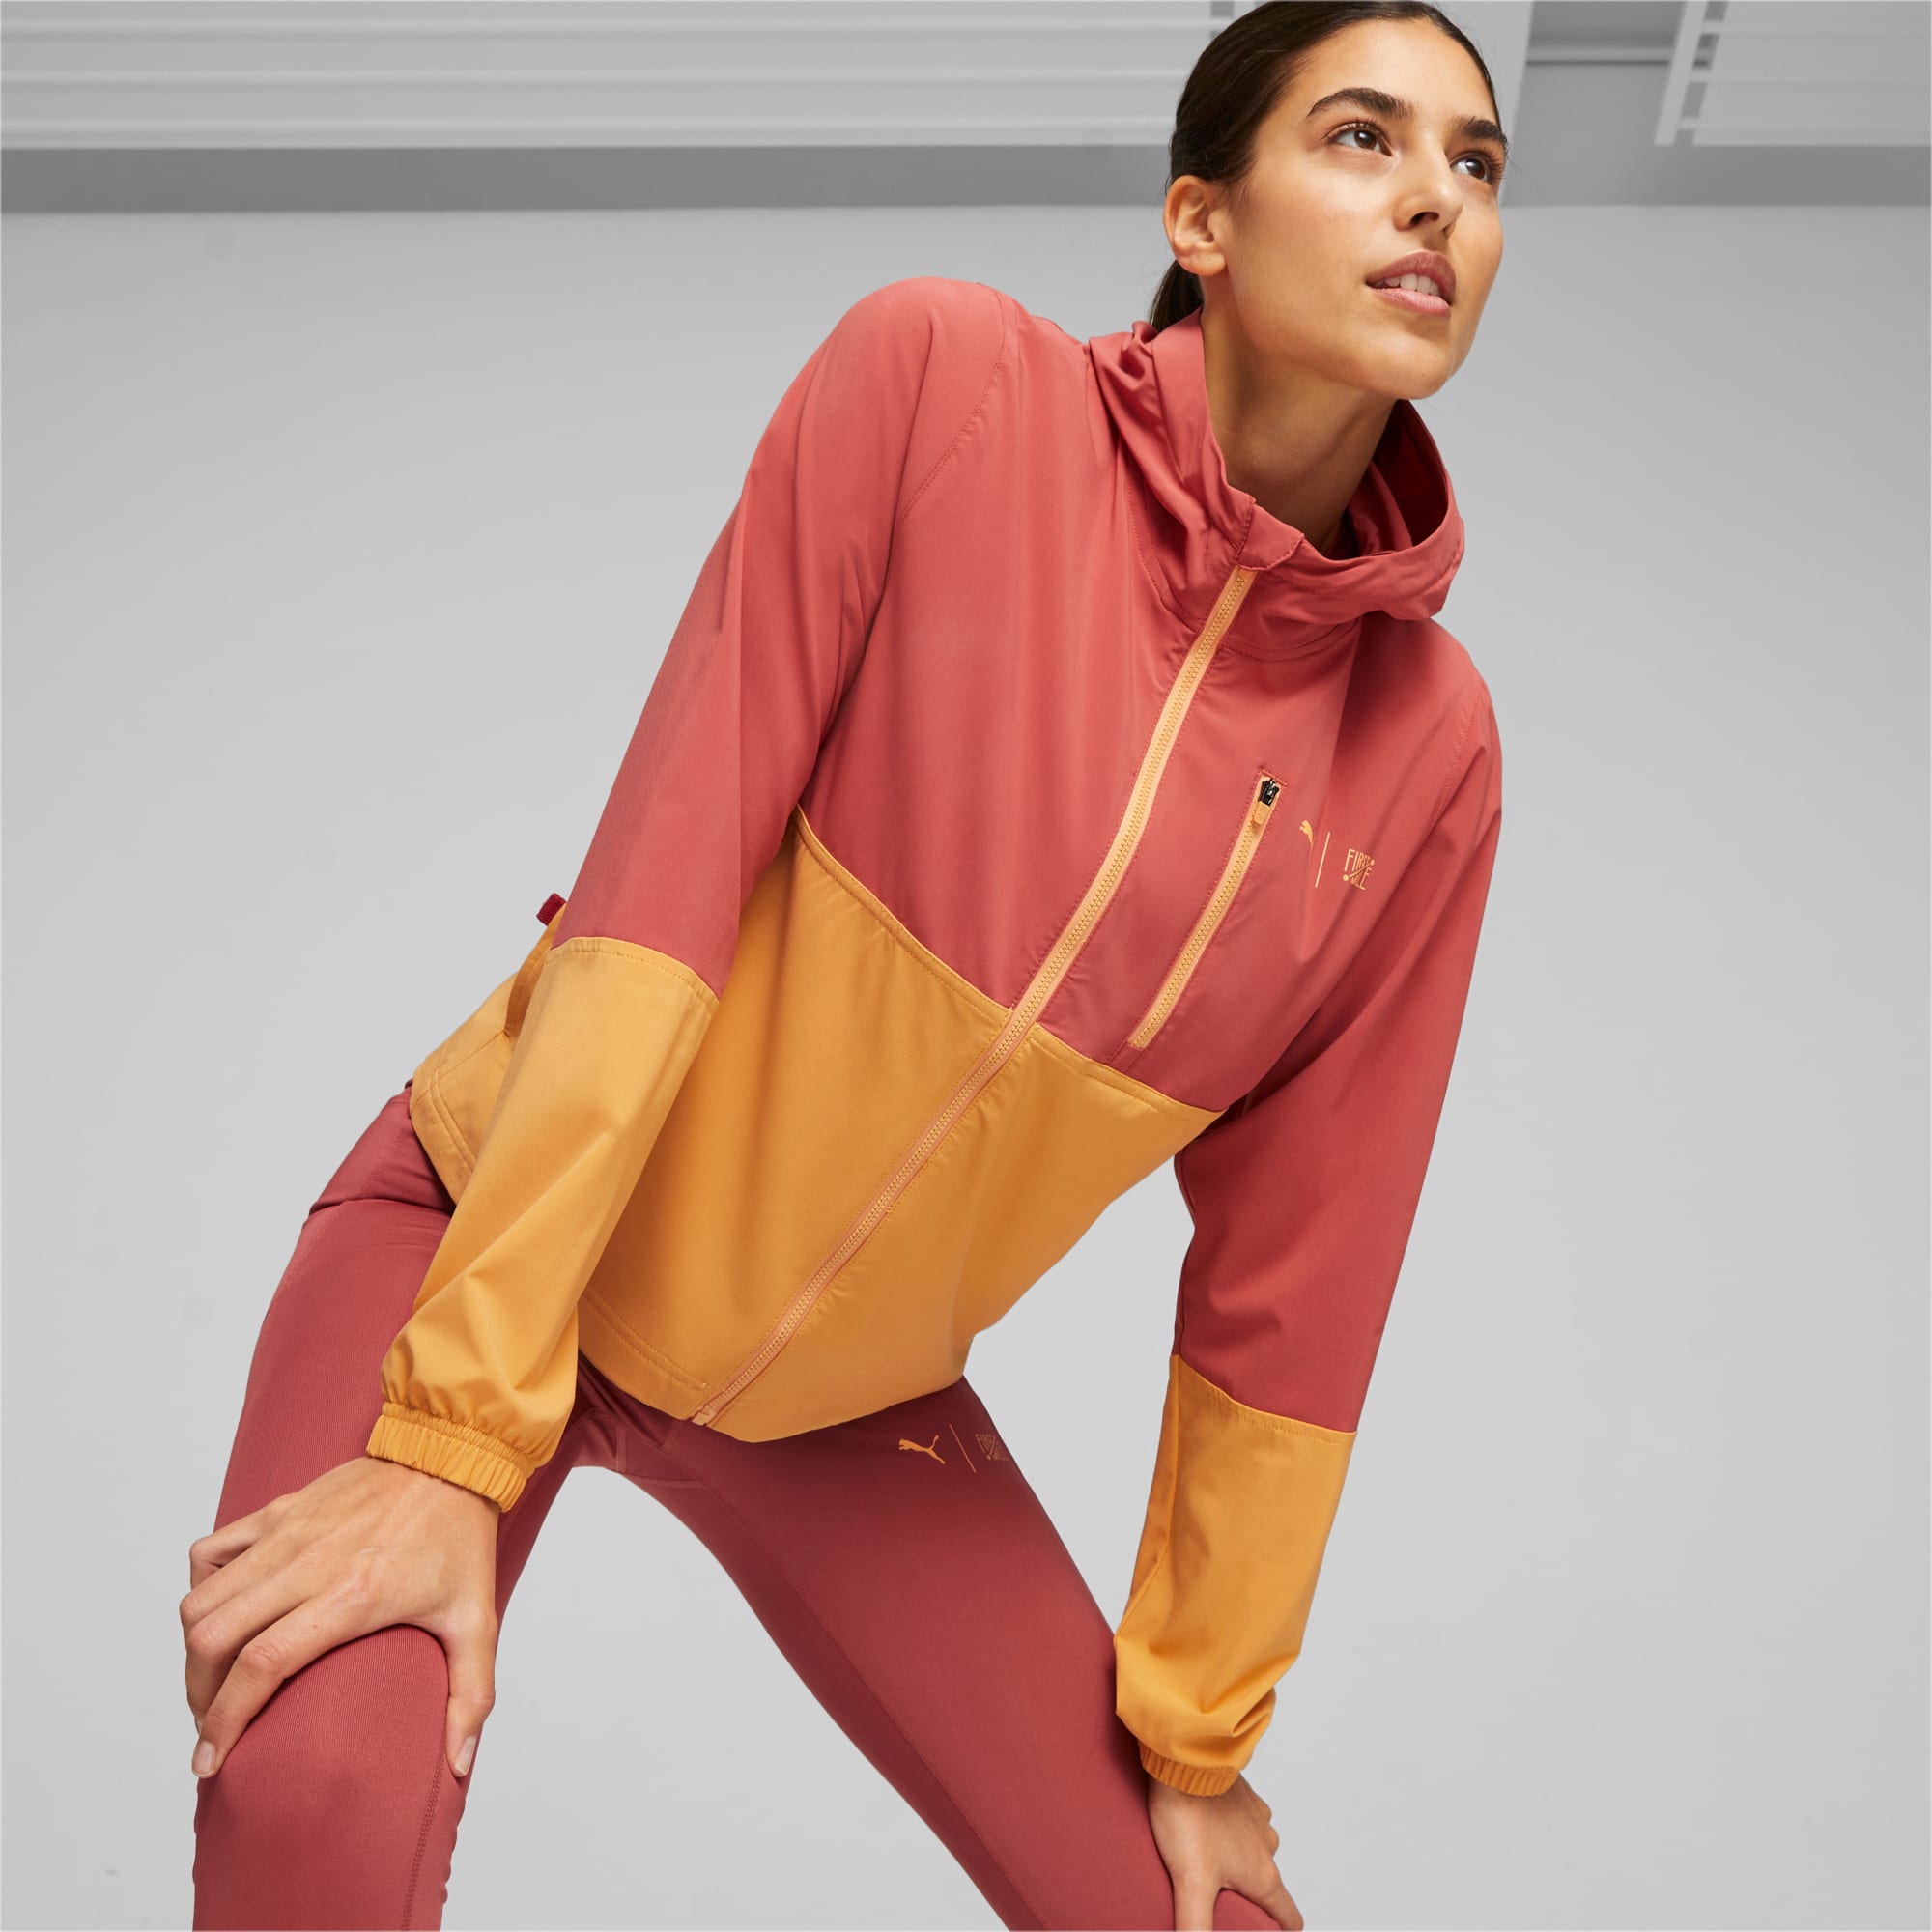 Nike Women's Jacket - Red - Xs